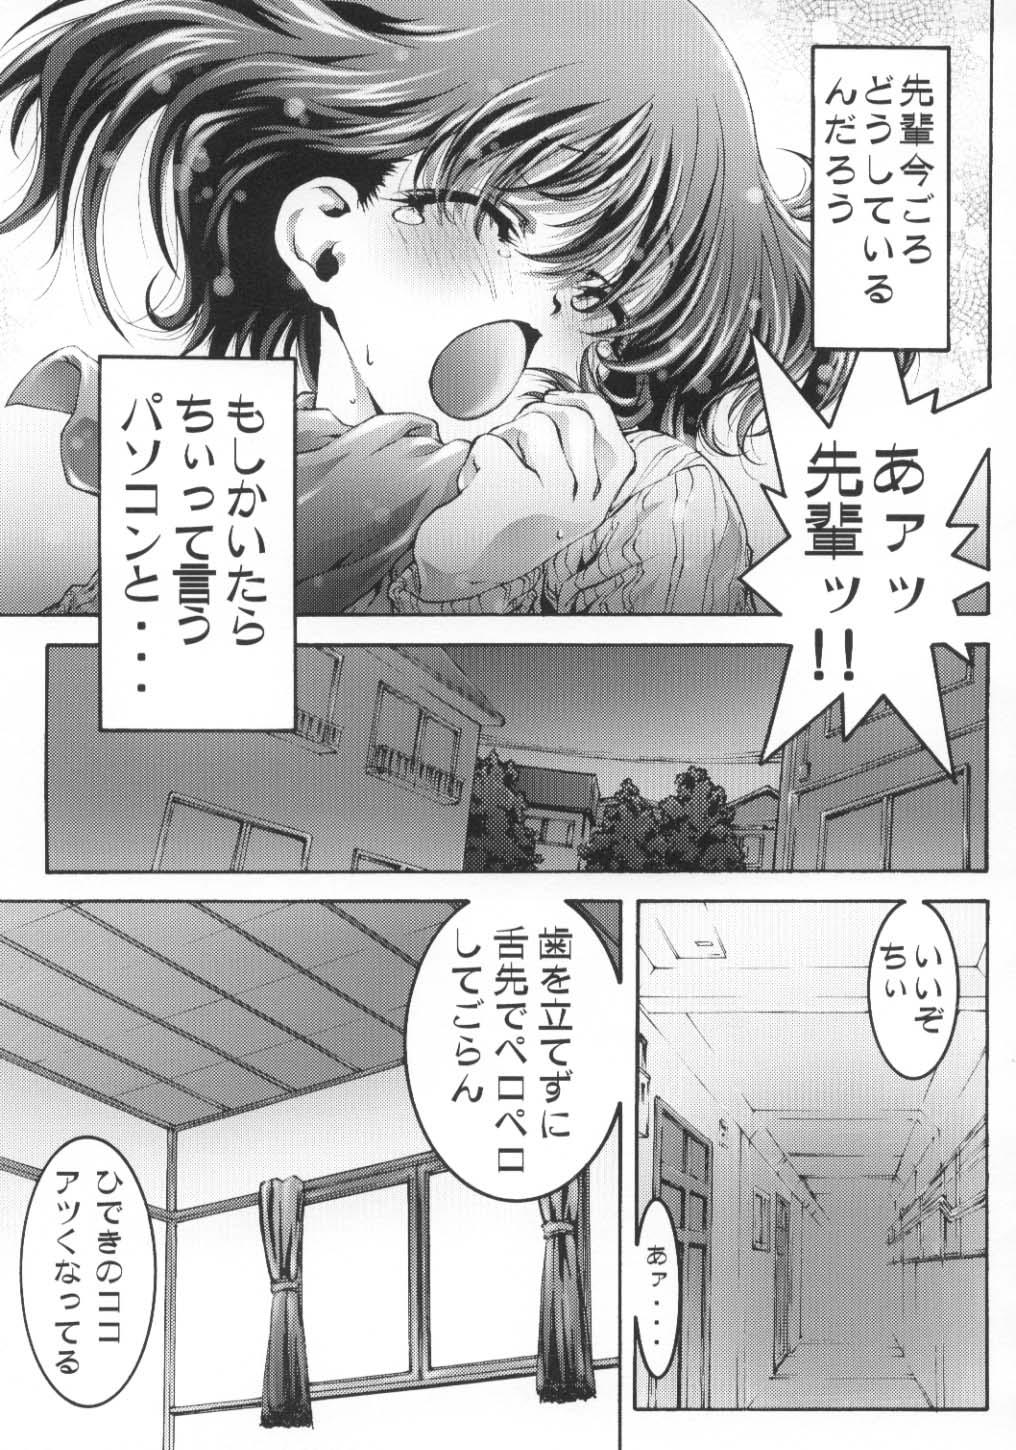 Sesso ES - Sakura taisen Chobits Black - Page 12